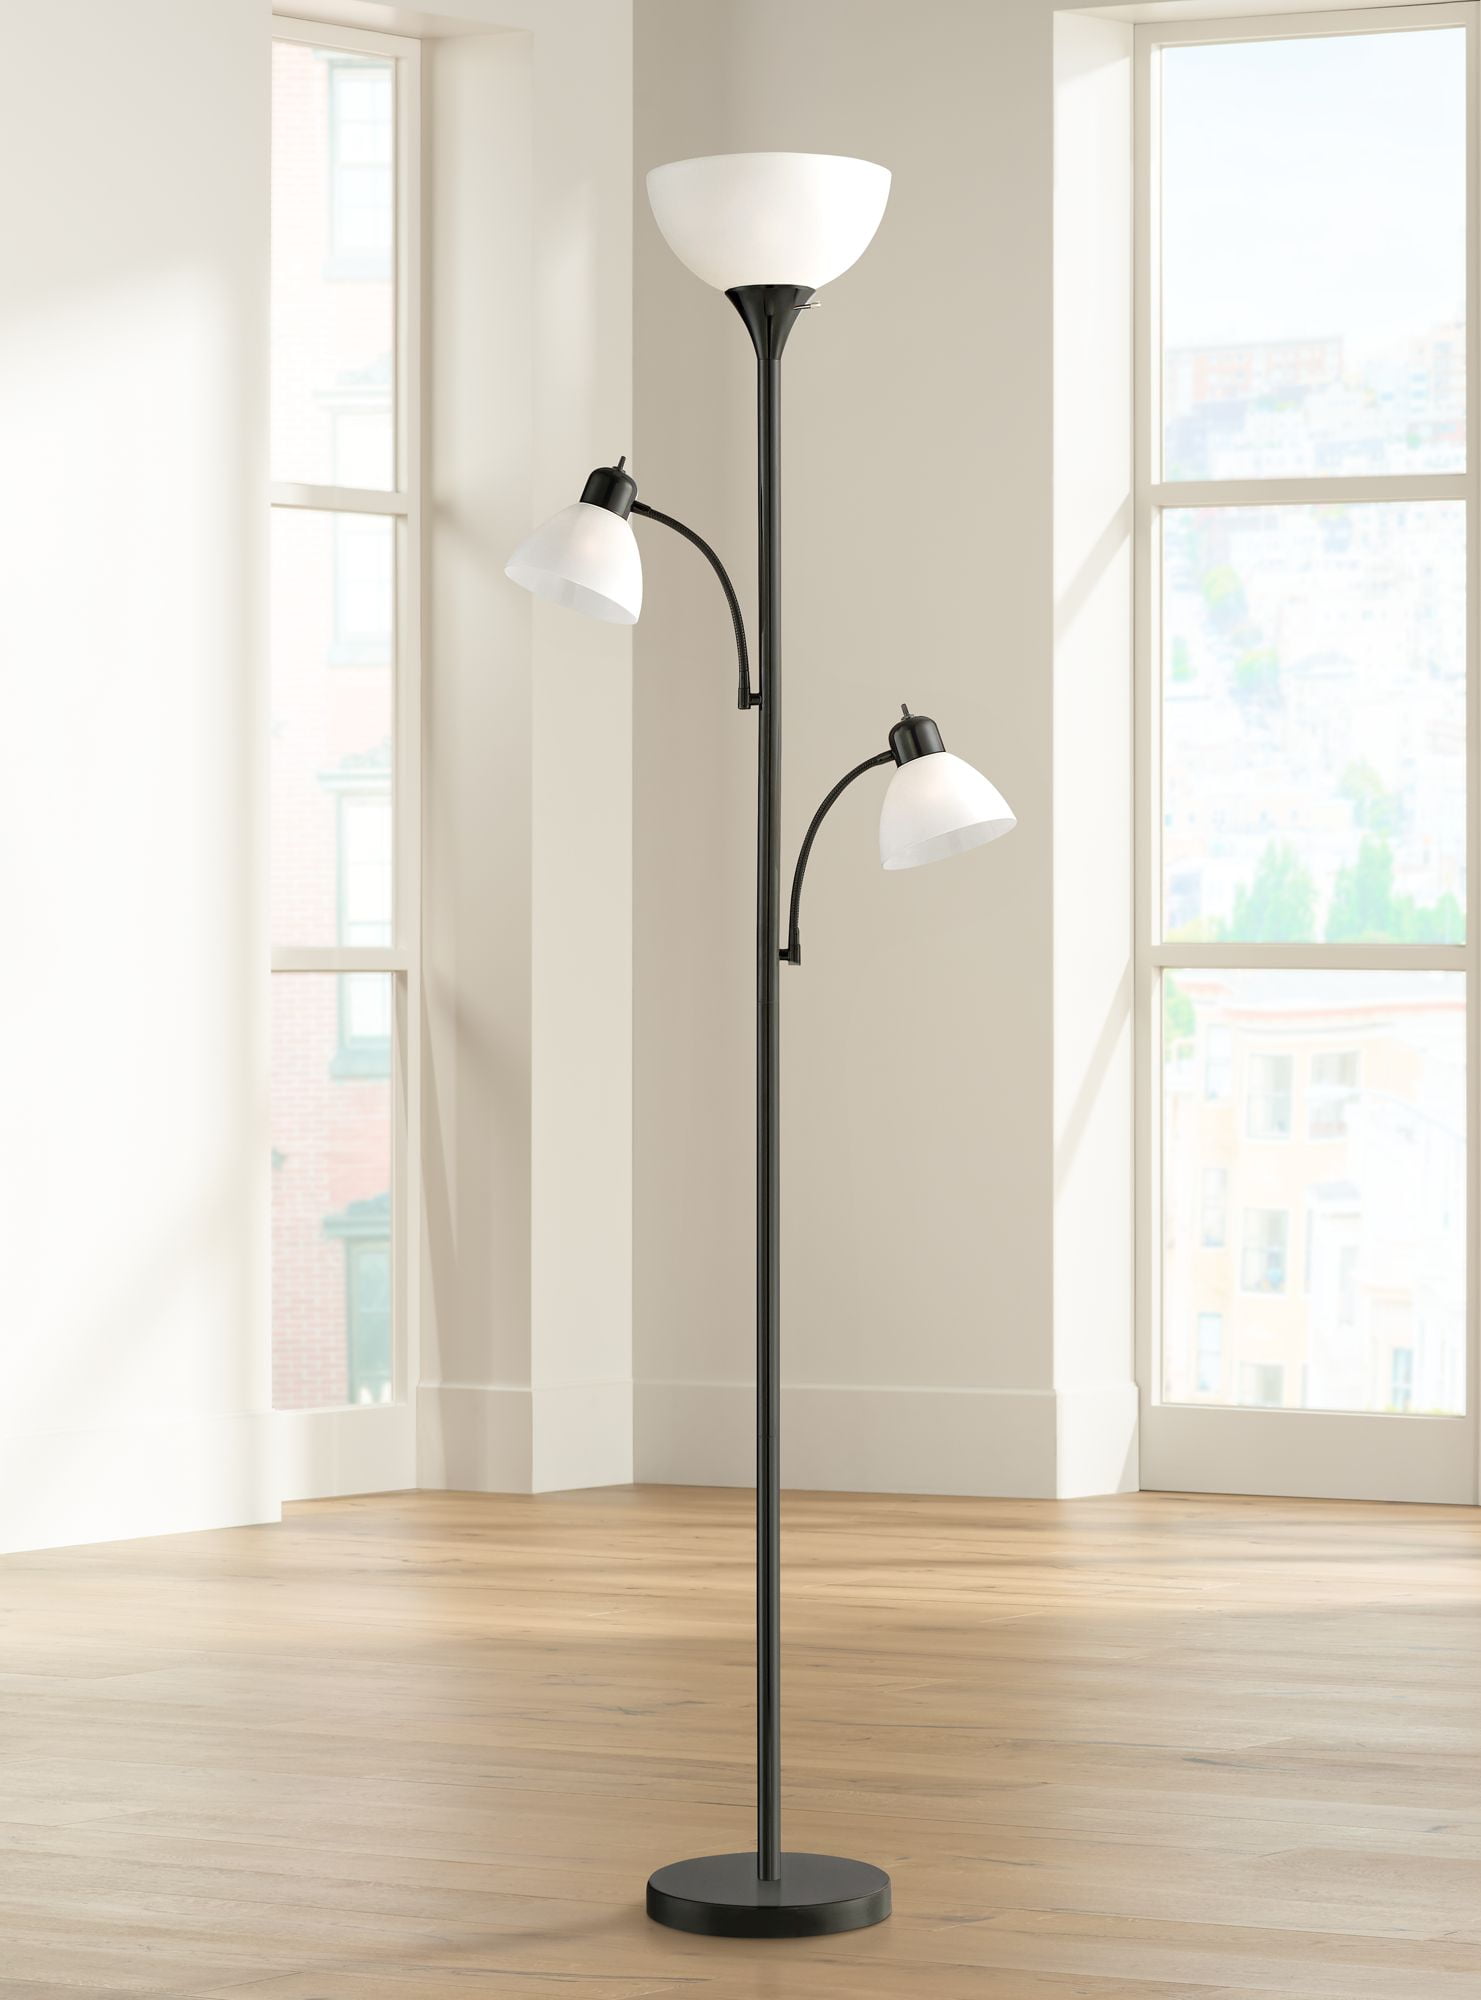 360 Lighting Modern Torchiere Floor Lamp 3-Light Tree Black Metal White  Shades for Living Room Reading Bedroom Office Uplight - Walmart.com